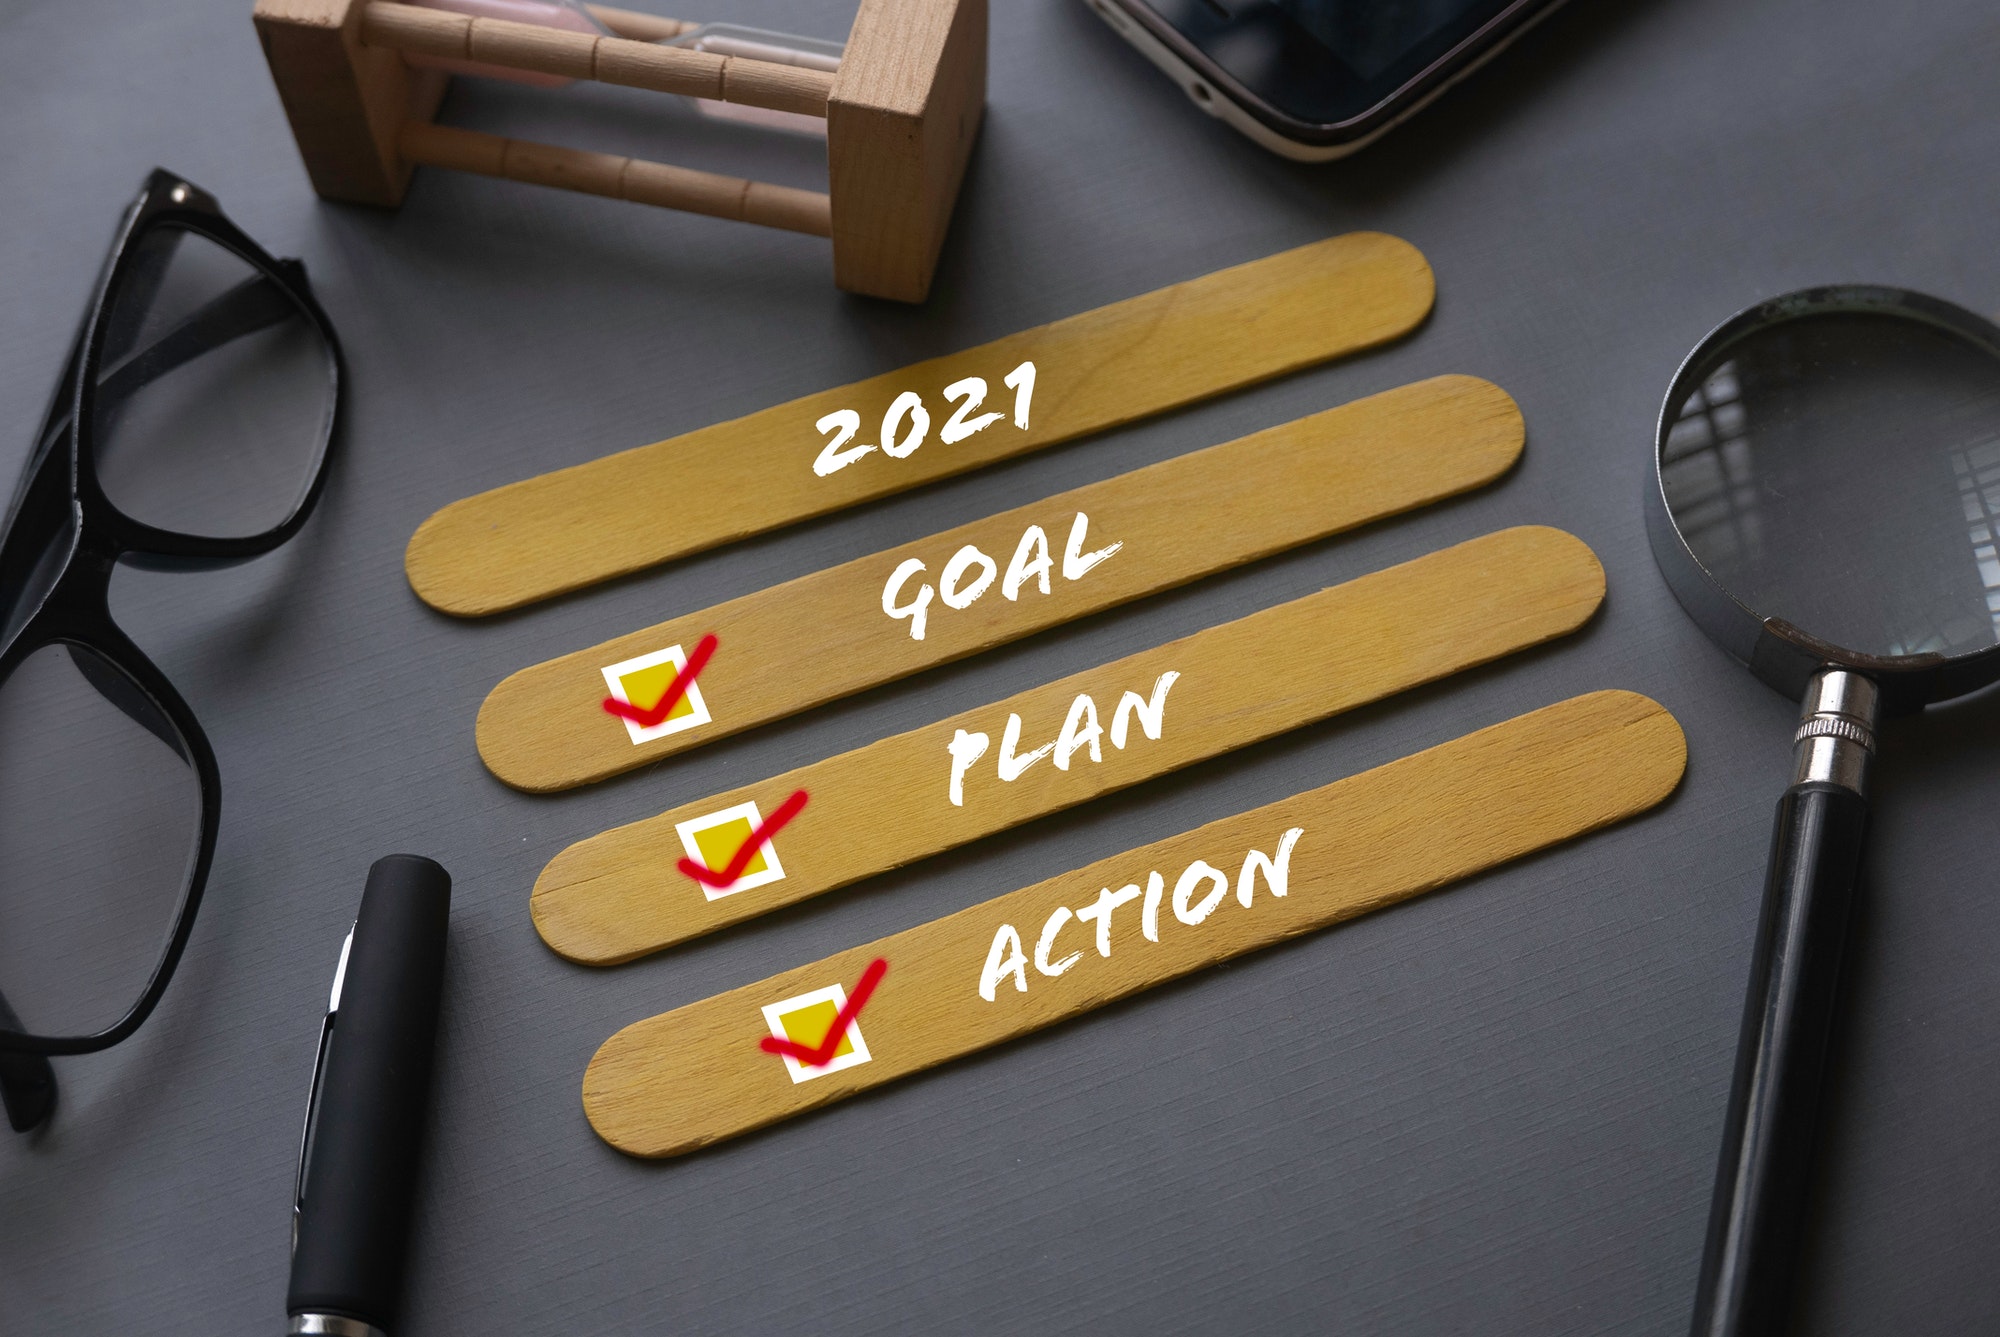 2021 goal plan action